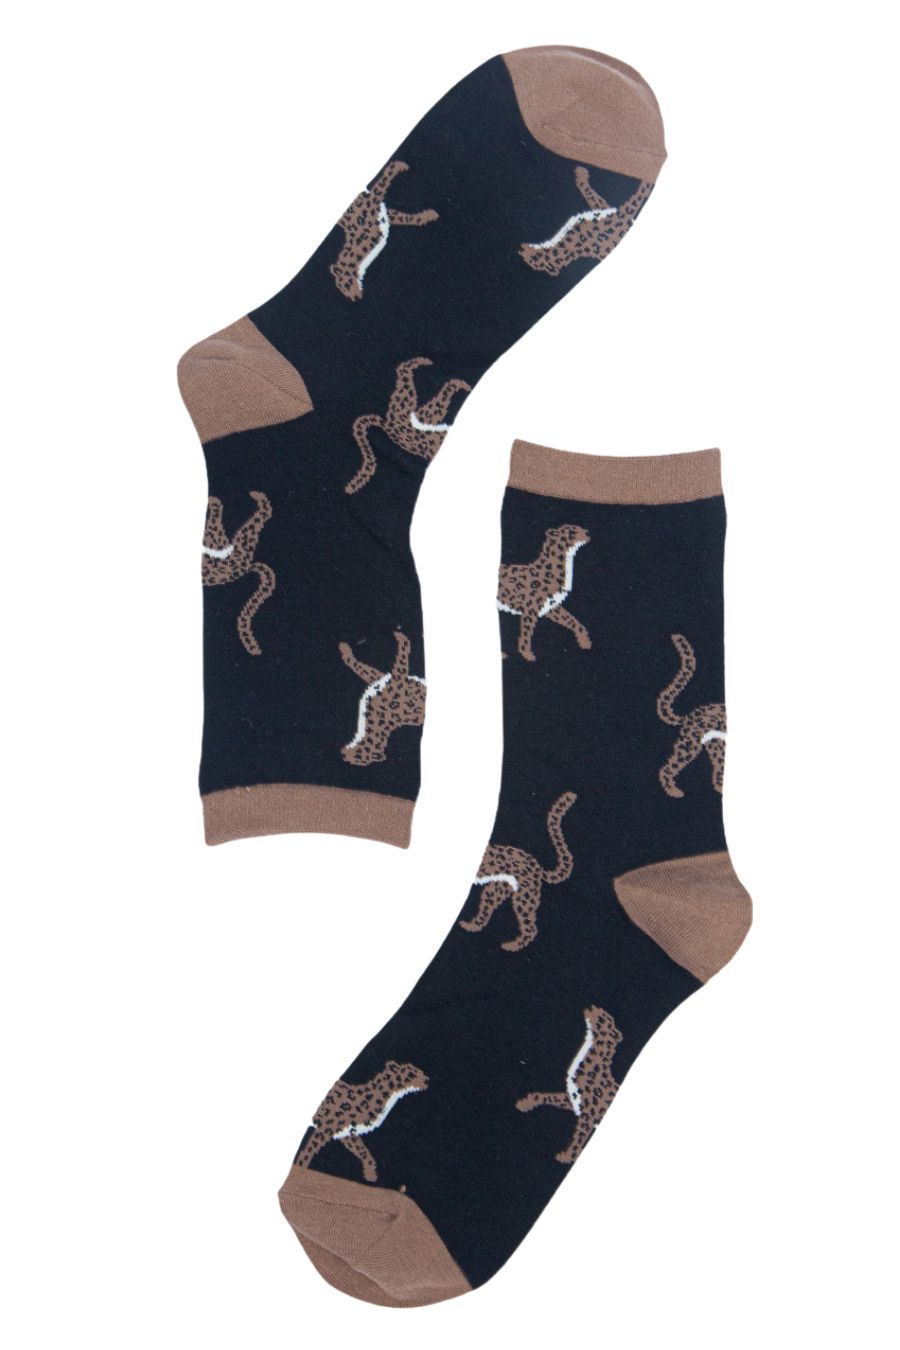 black bamboo socks with brown cheetahs